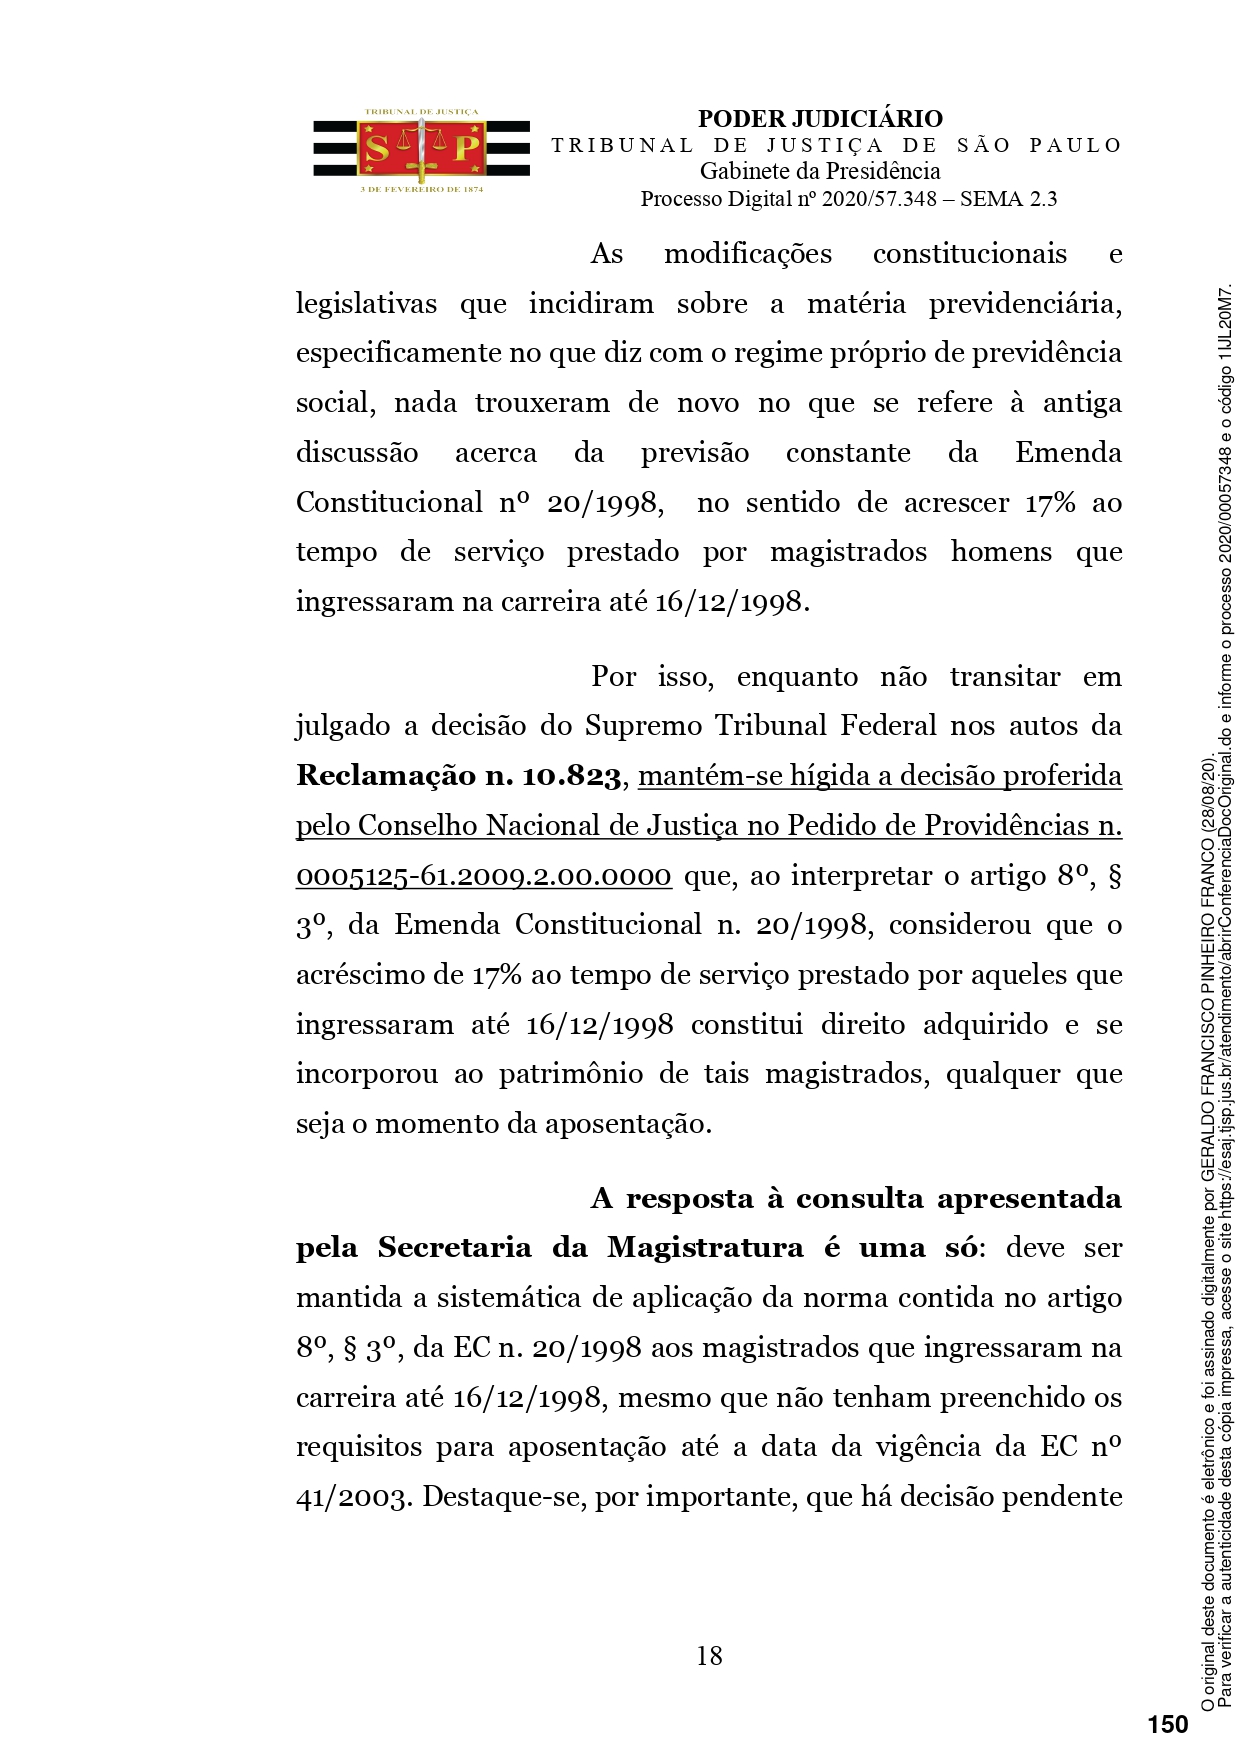 reforma-previdencia-tj-sp_page-0018.jpg